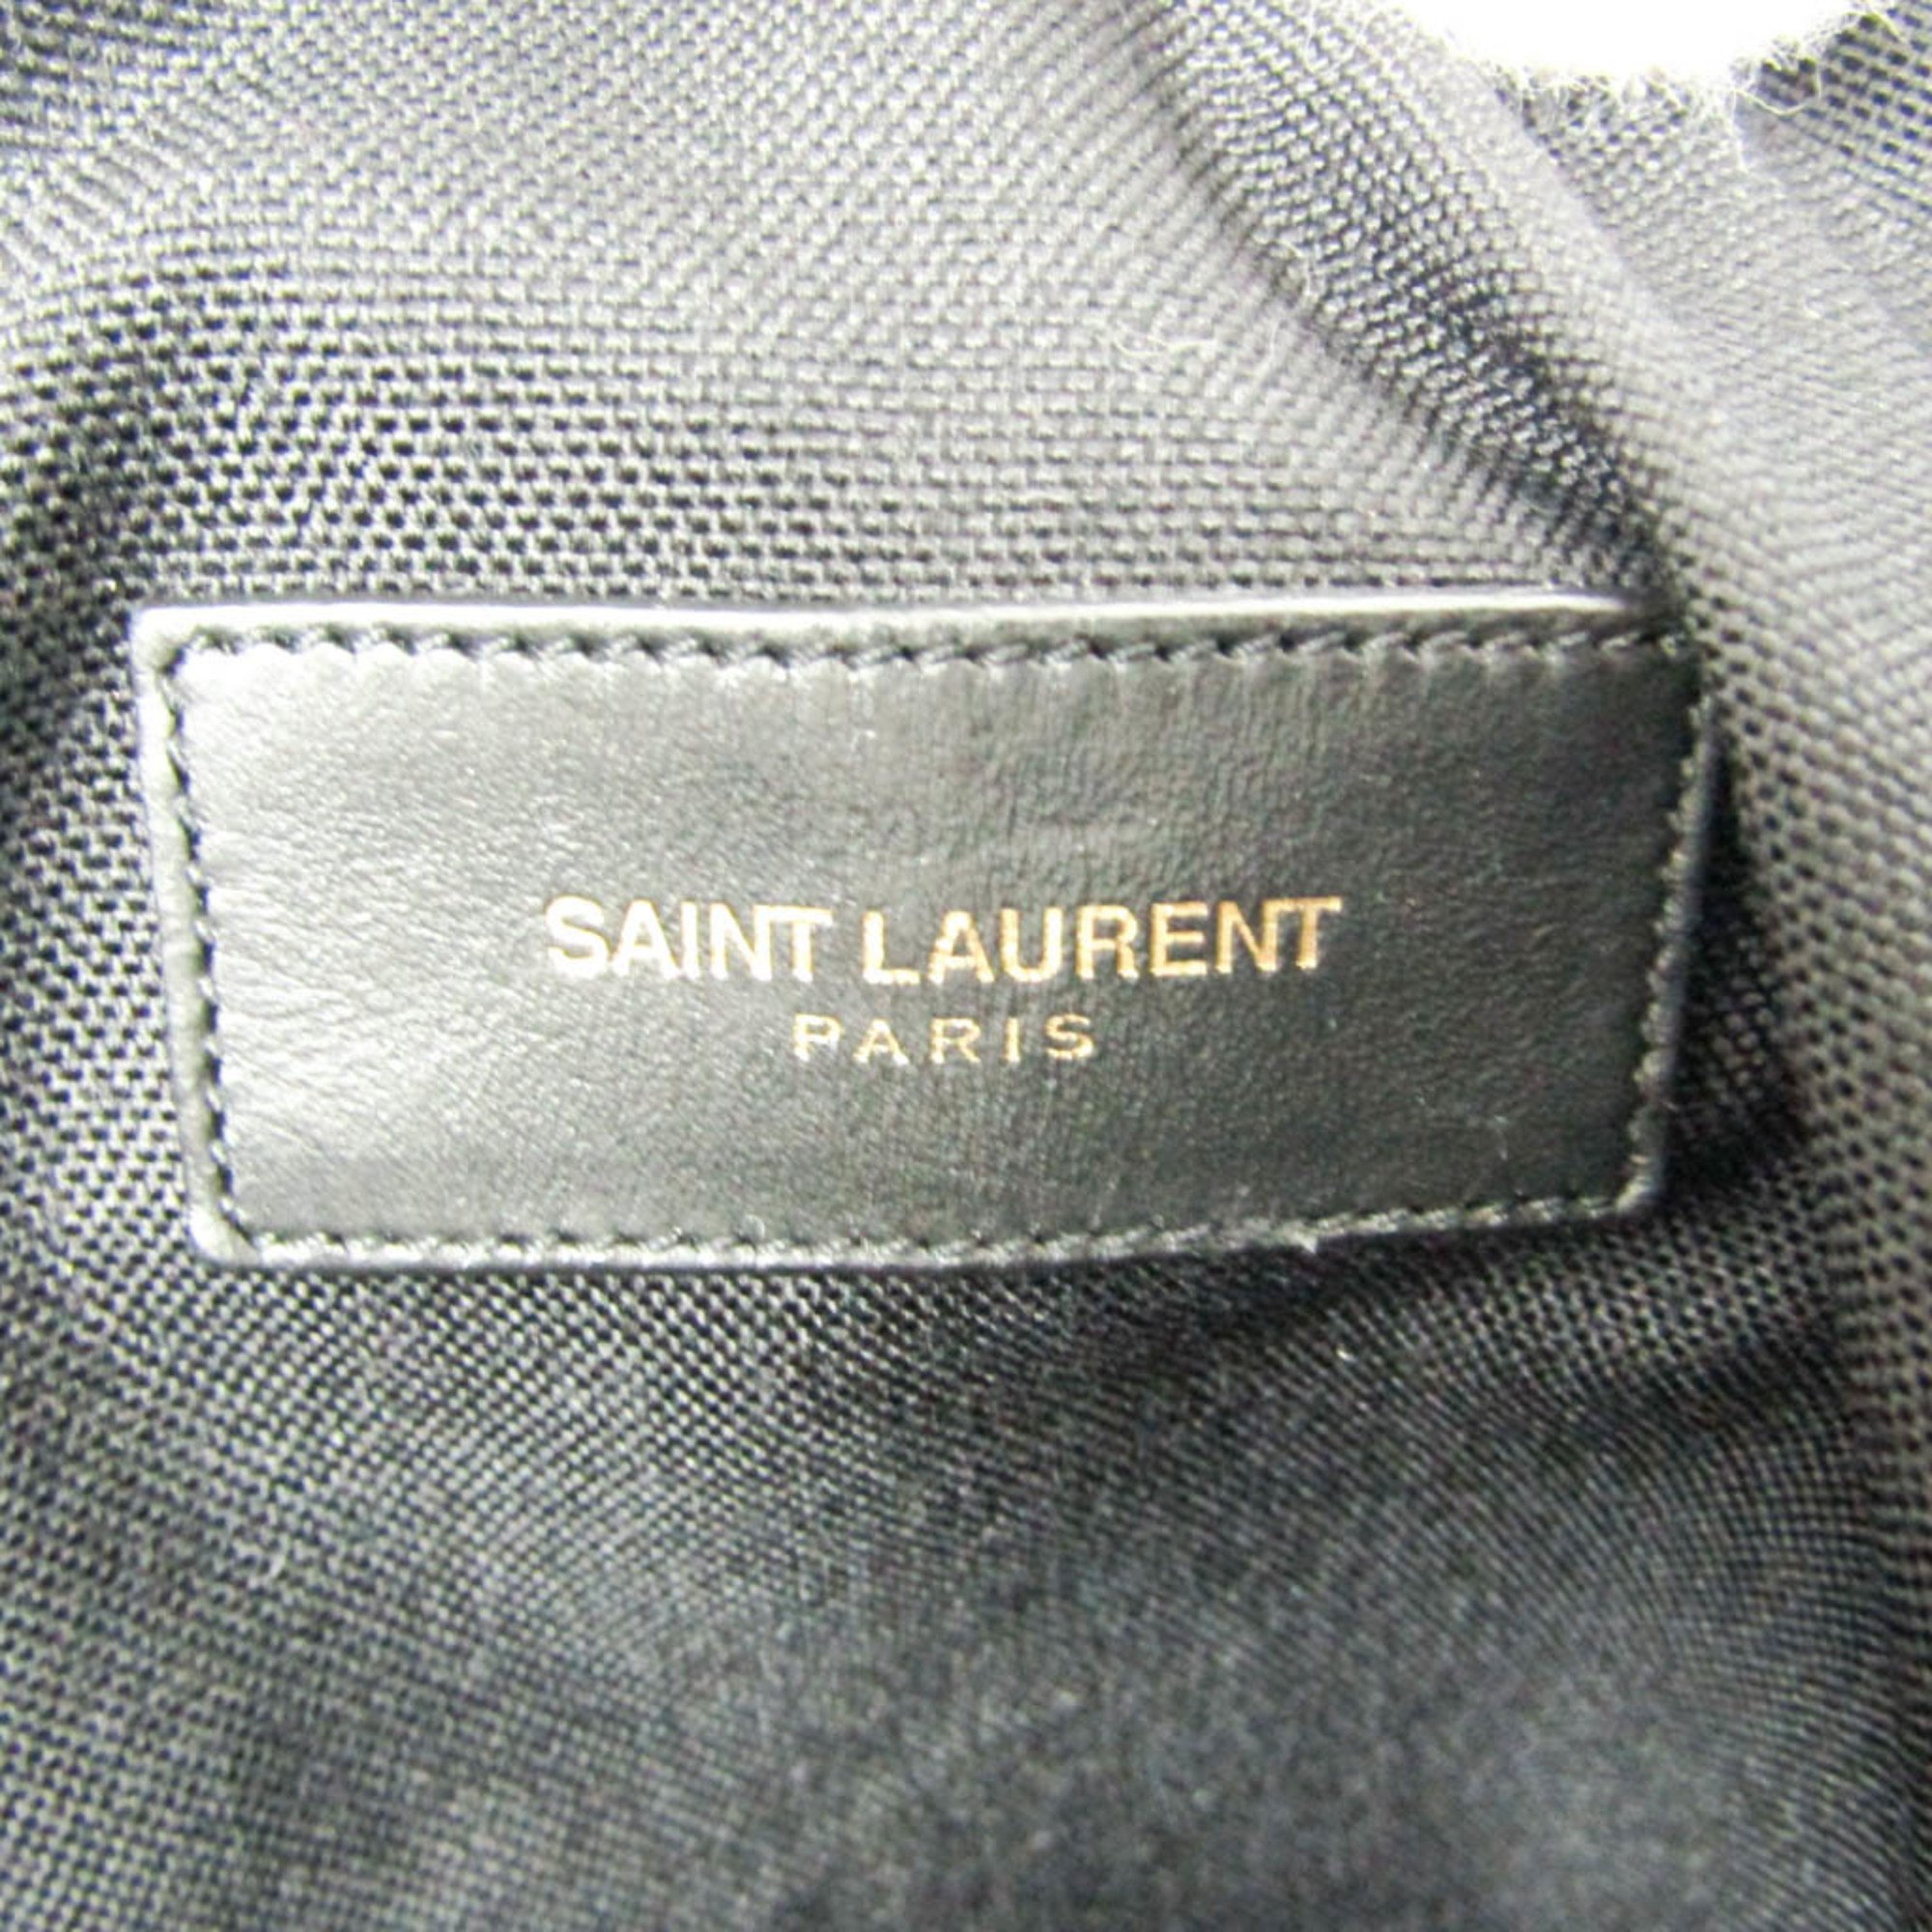 Saint Laurent Hunting Lock Sack 342609 Men,Women Canvas,Leather Backpack Black,Navy